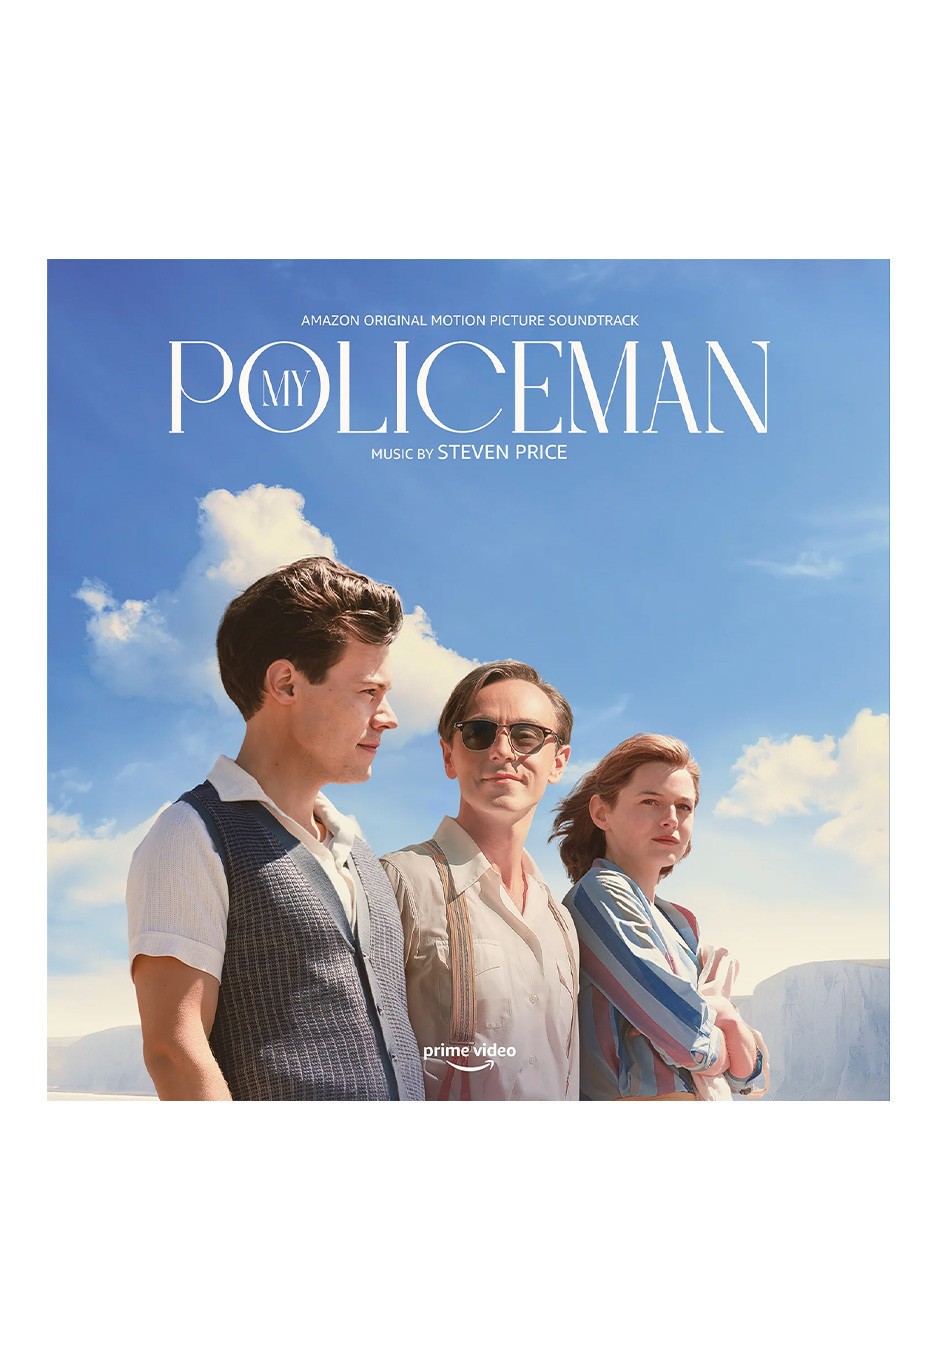 My Policeman - My Policeman OST (Steven Price) Ltd. Green & Silver - Vinyl